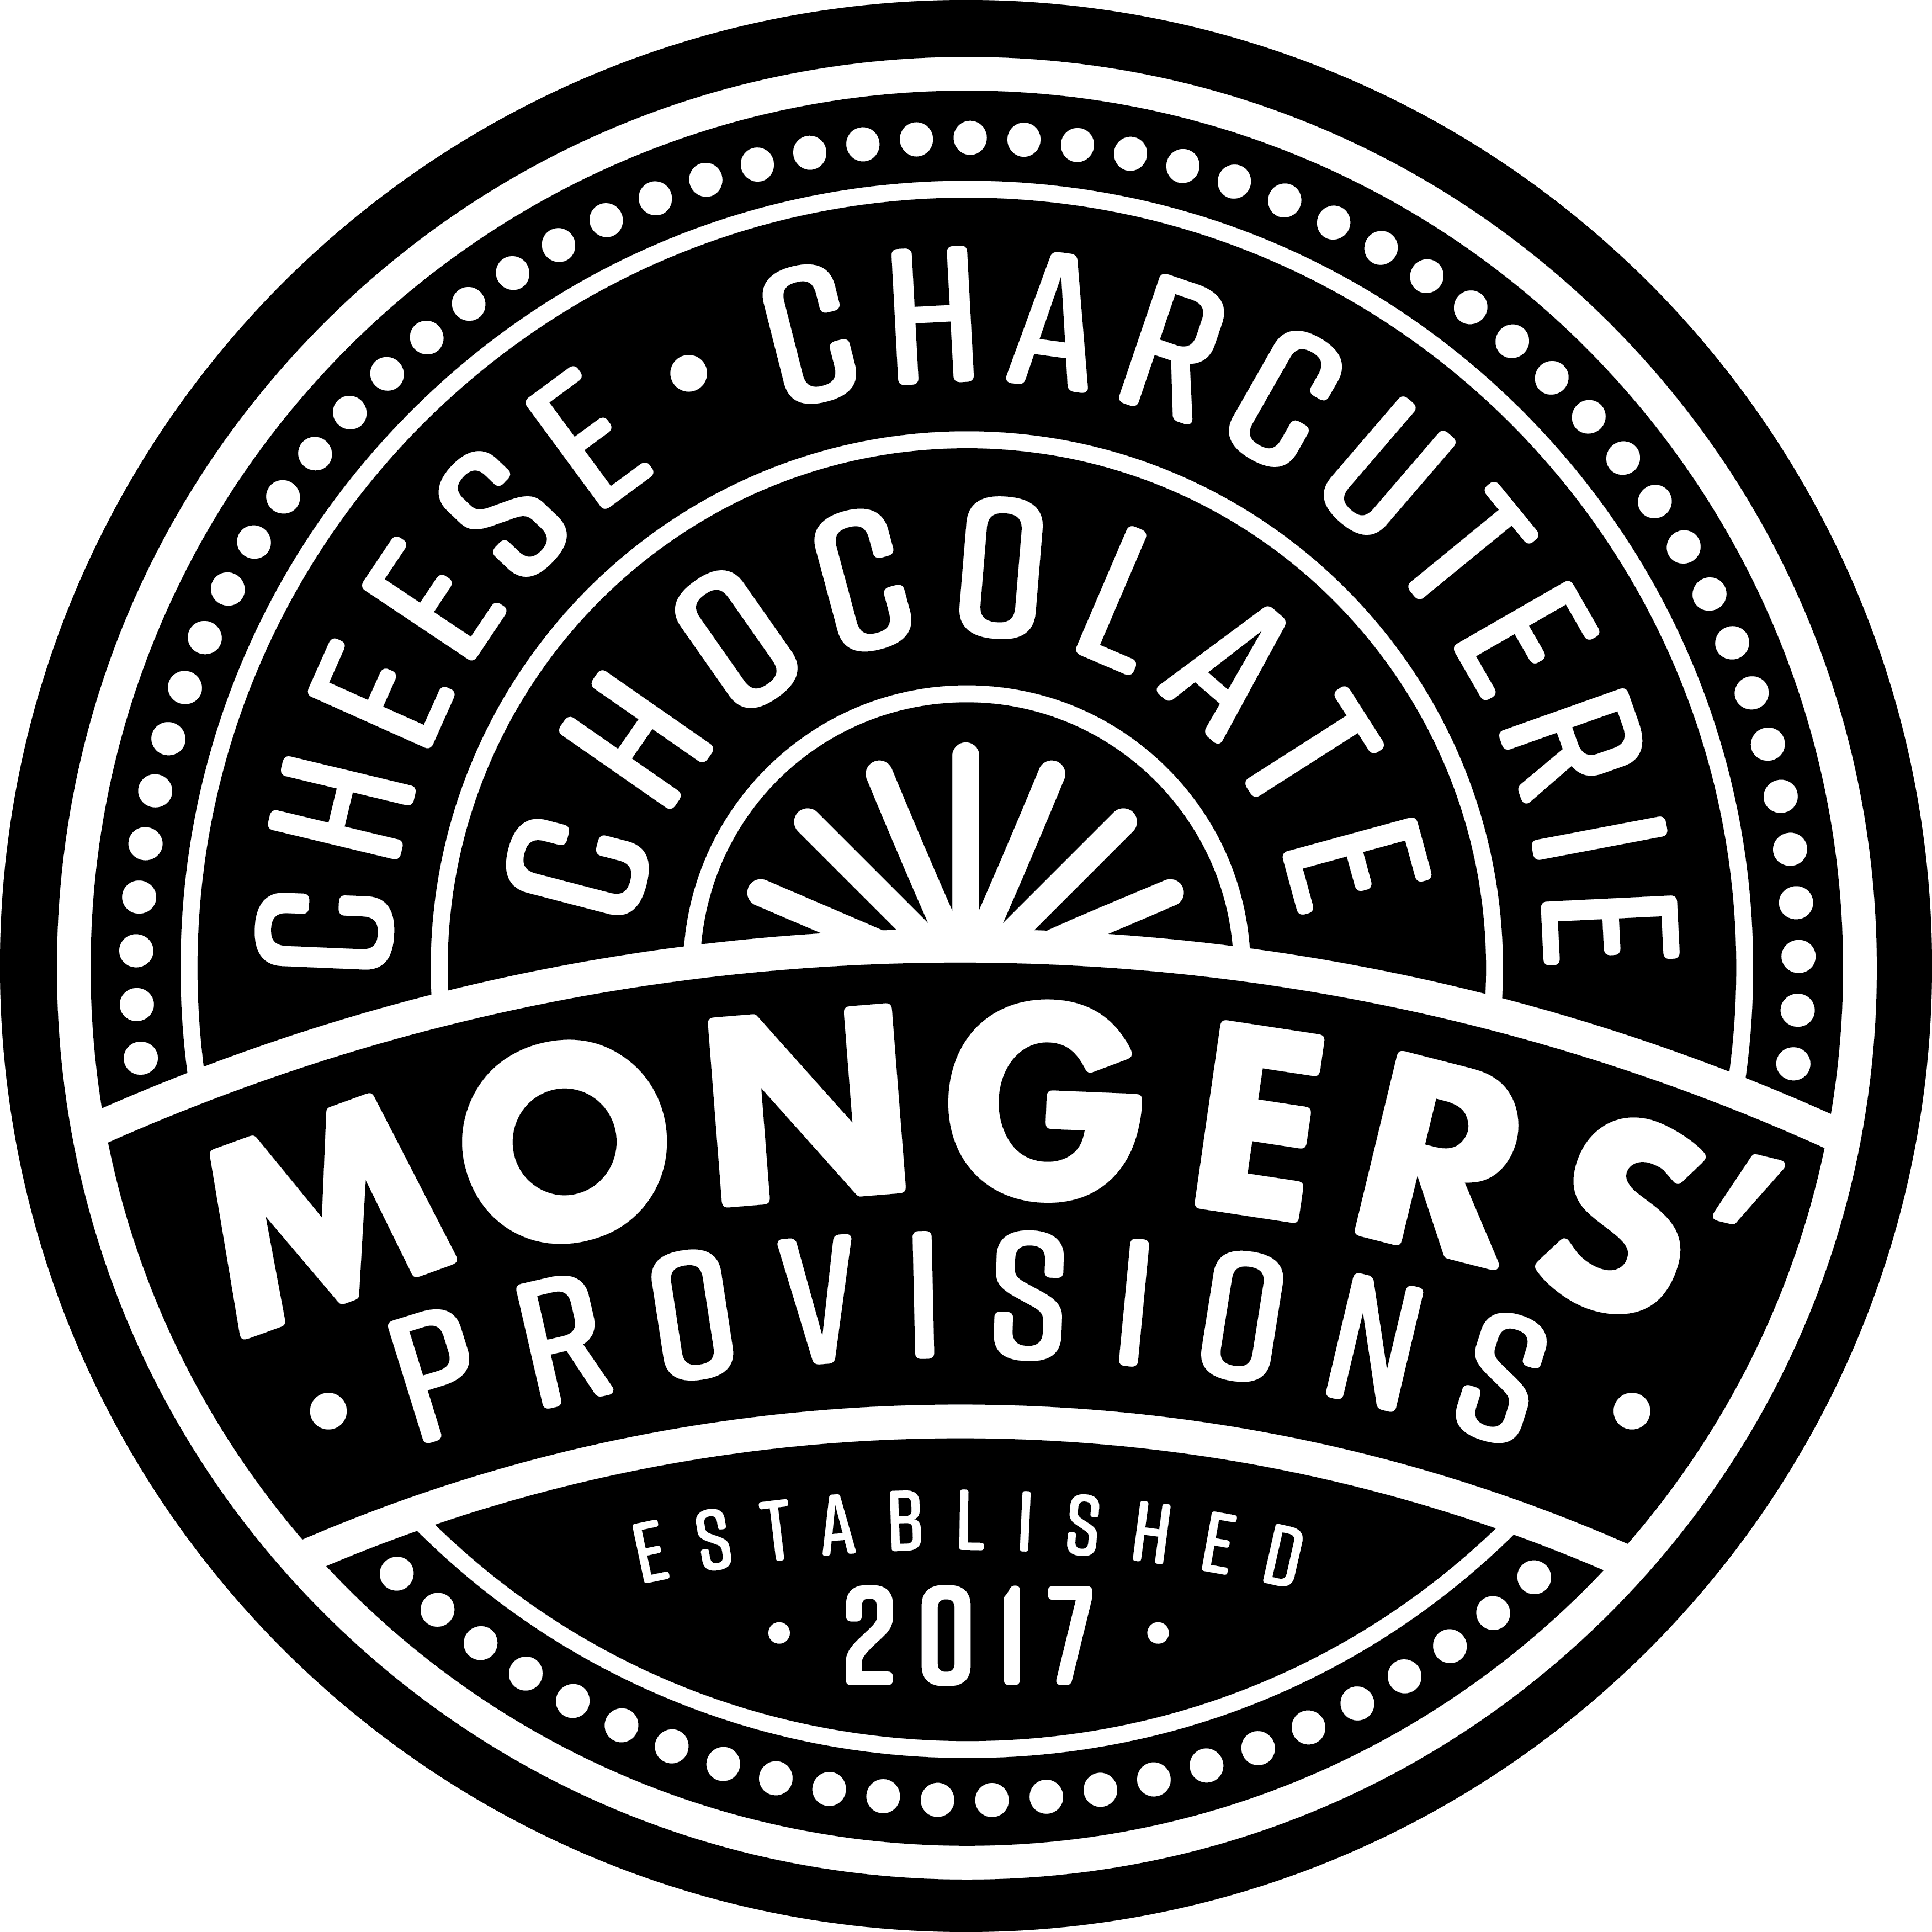 Mongers' Provisions